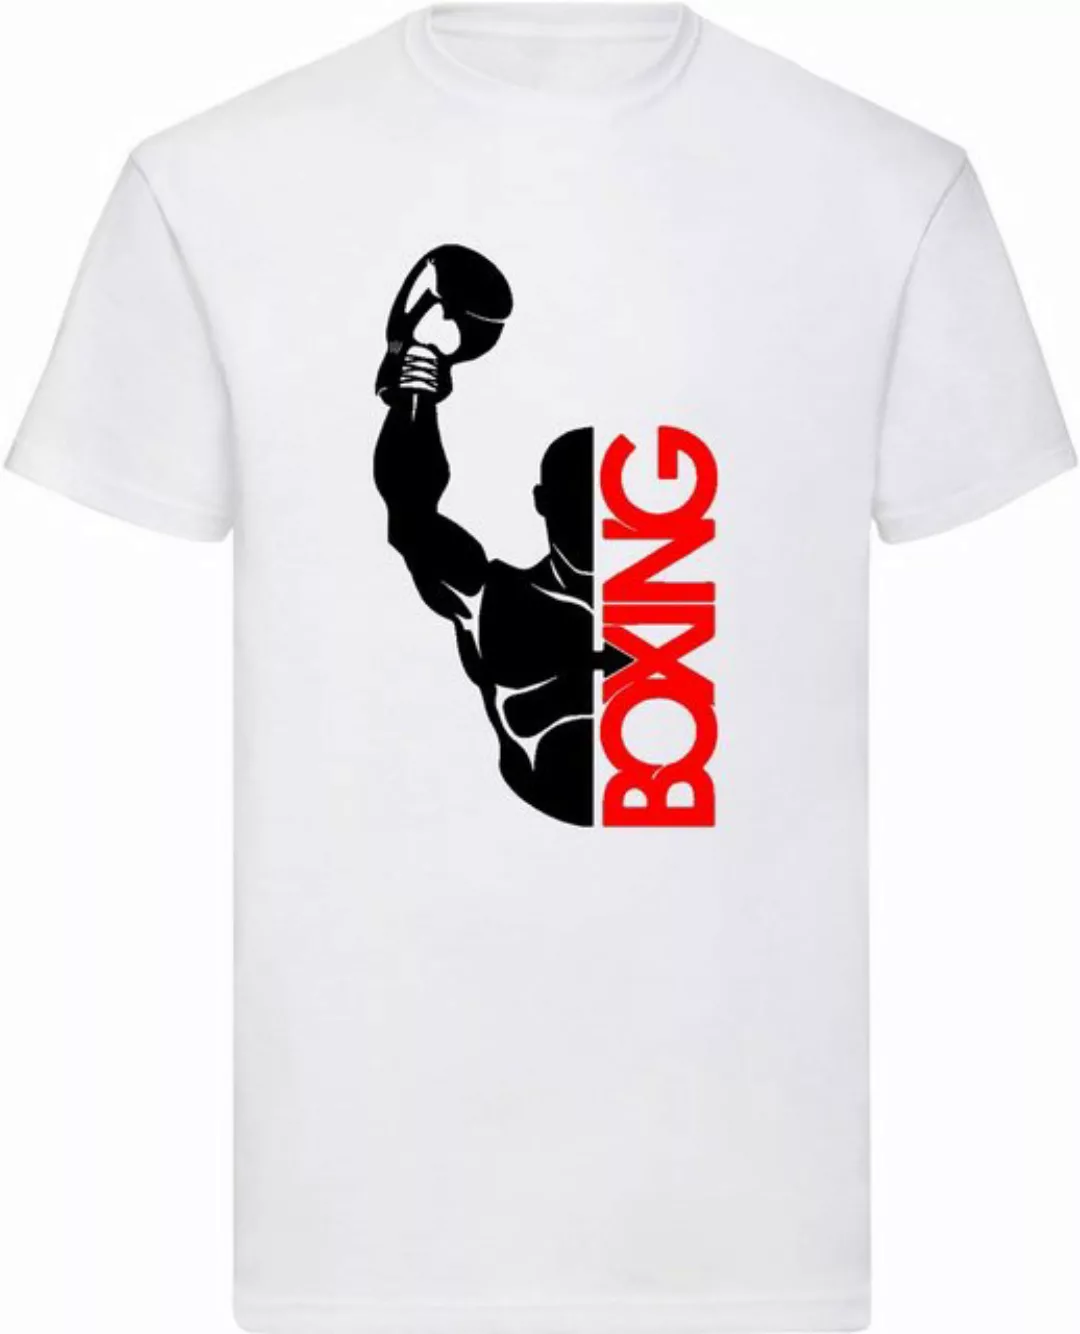 Banco Print-Shirt Herren Boxen Boxsport Outdoor Kampfsport Streetwear Outdo günstig online kaufen